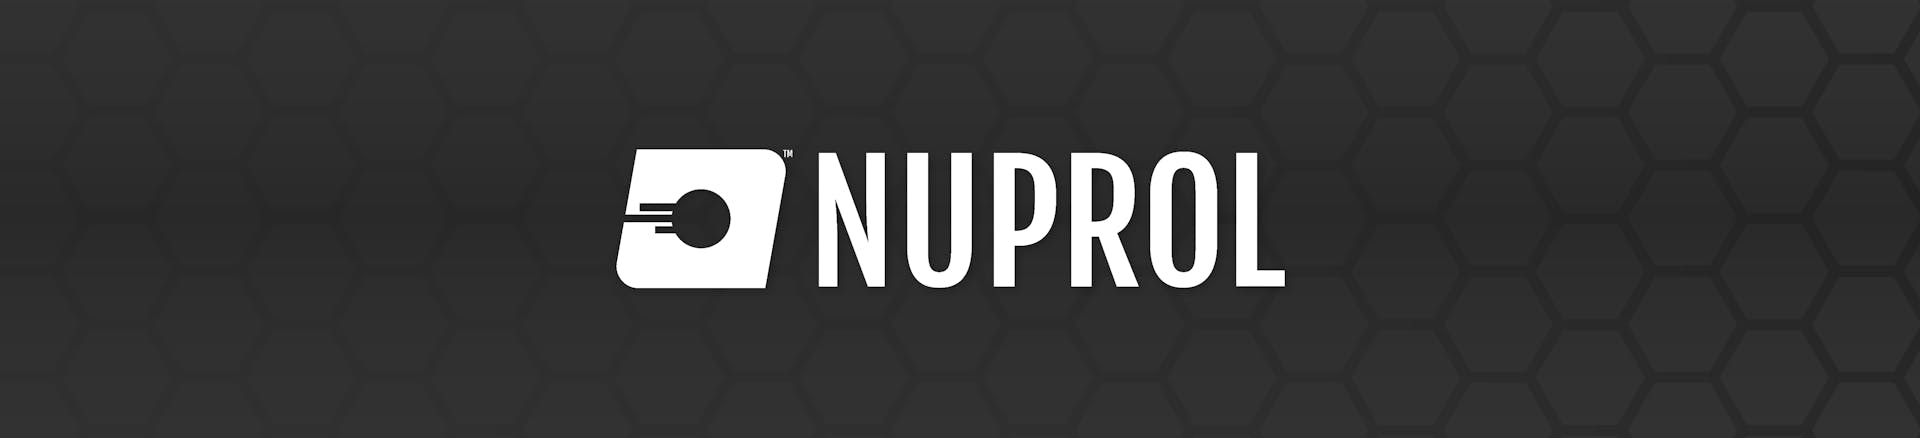 Nuprol Brand